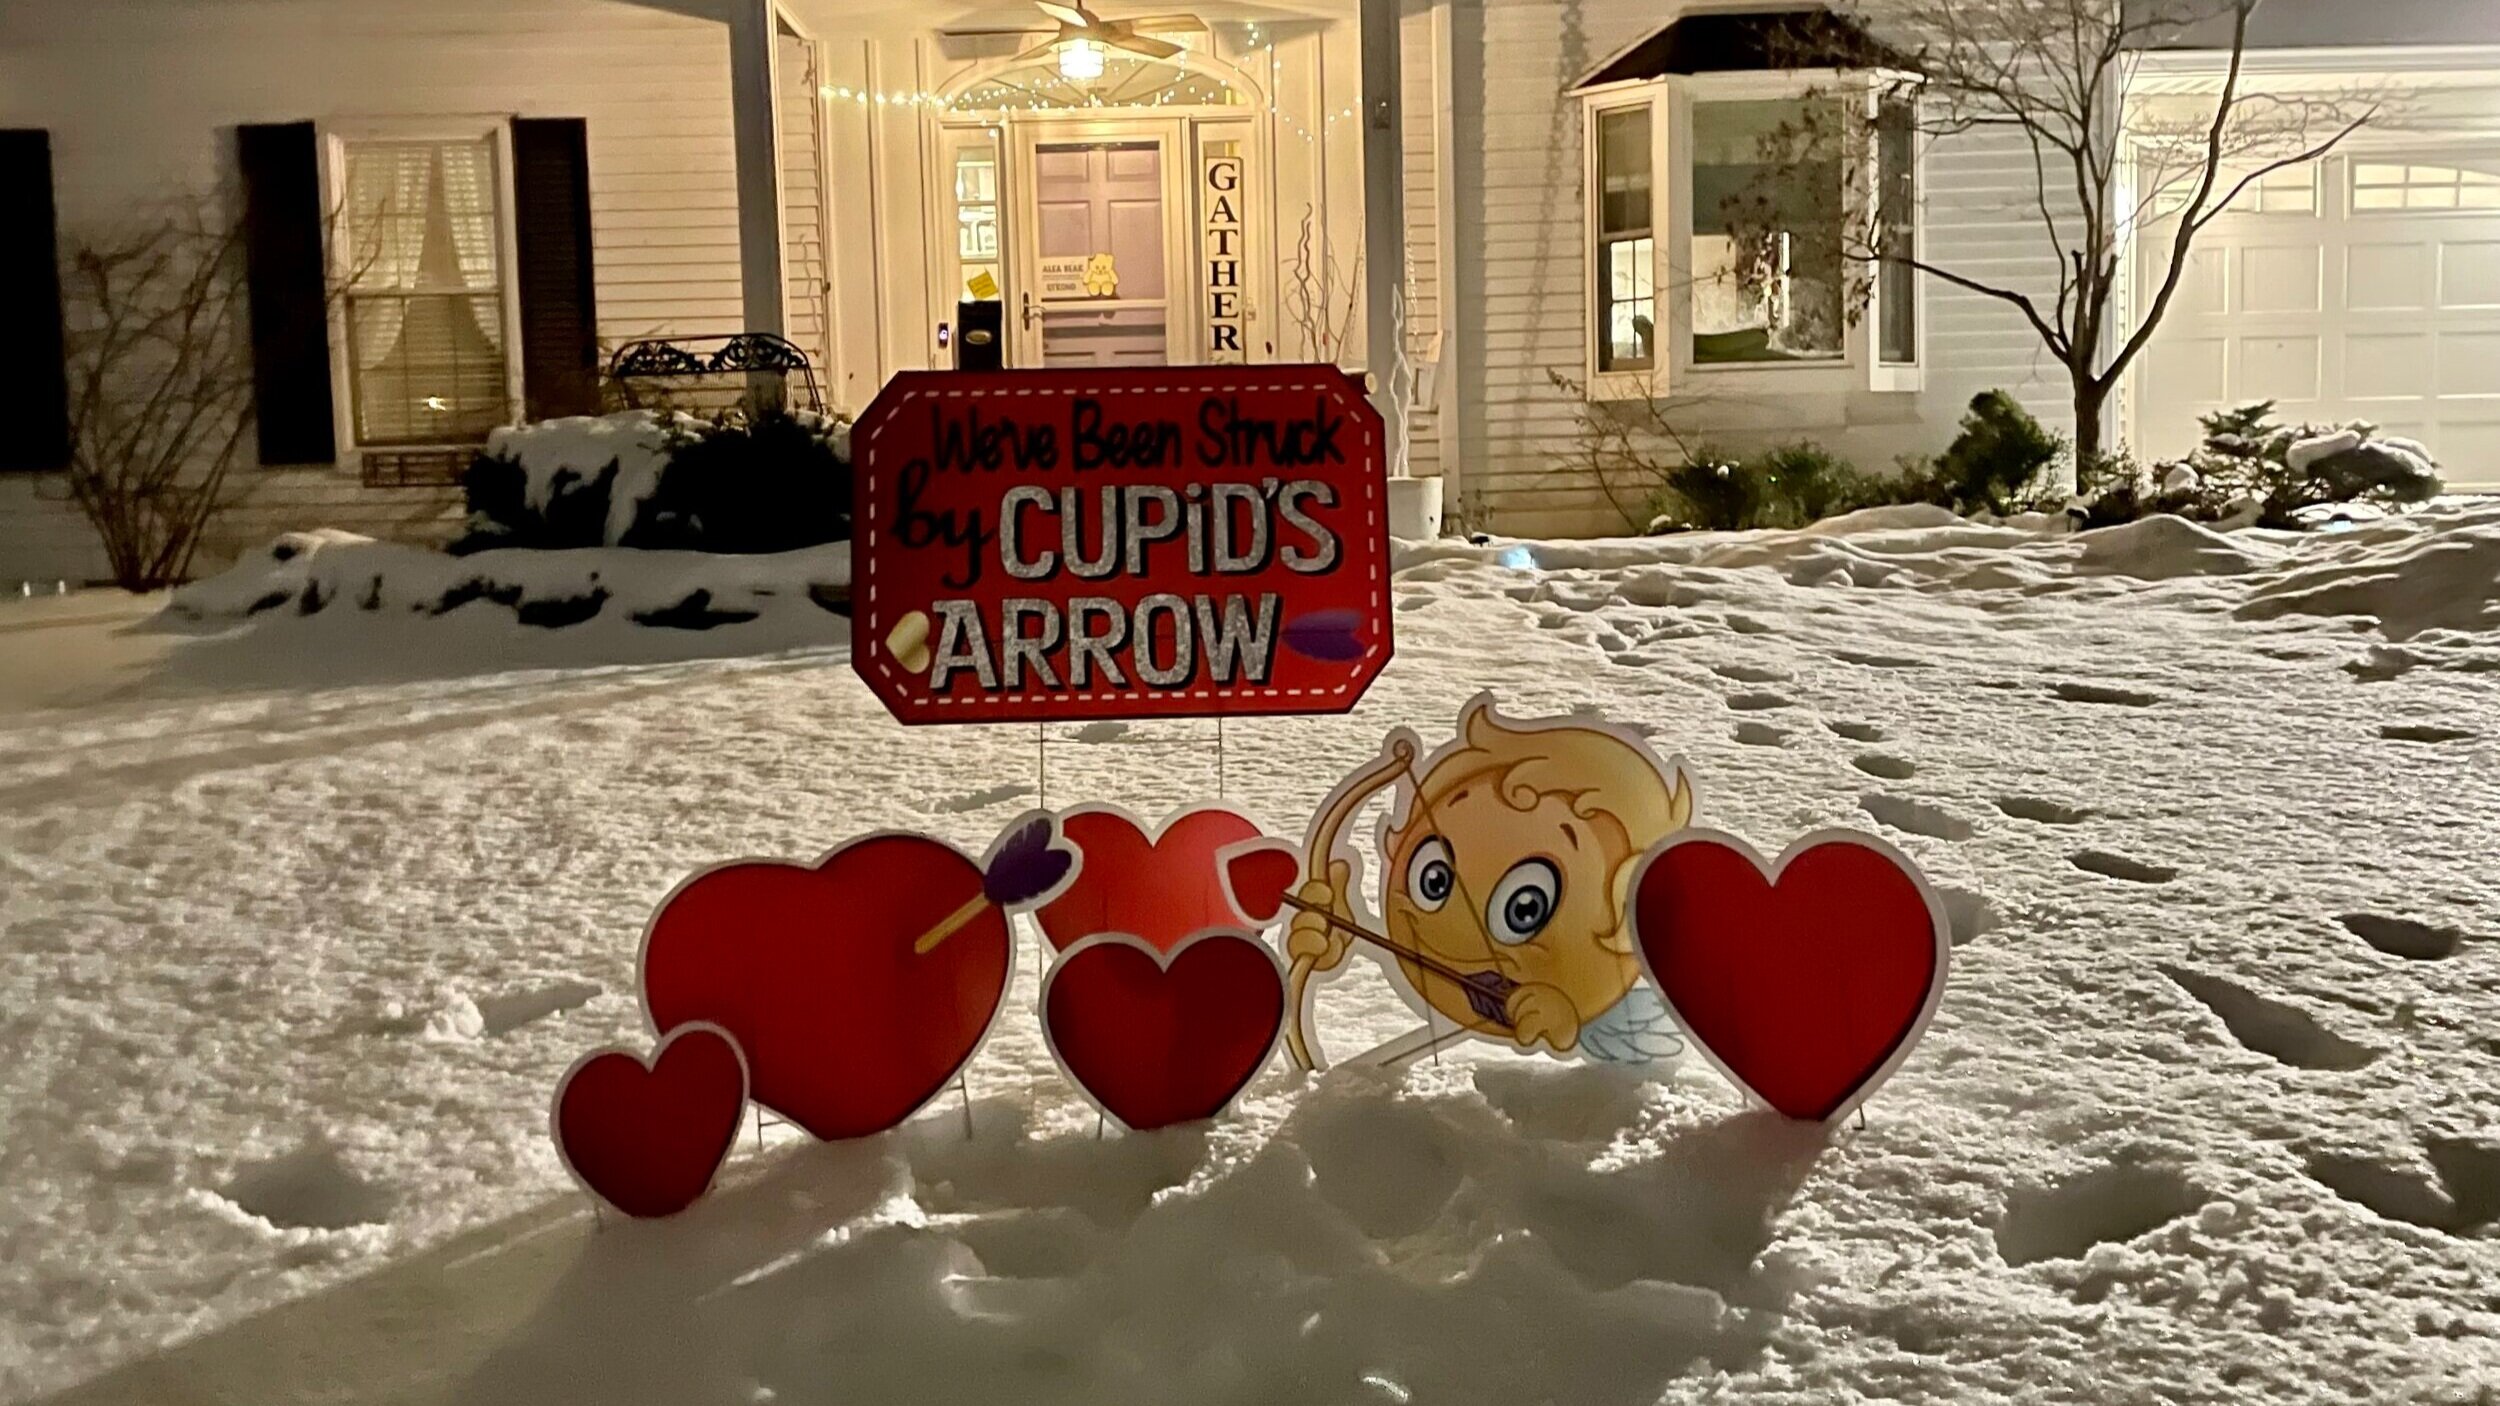 We've Been Struck by Cupid's Arrow  Yard Sign